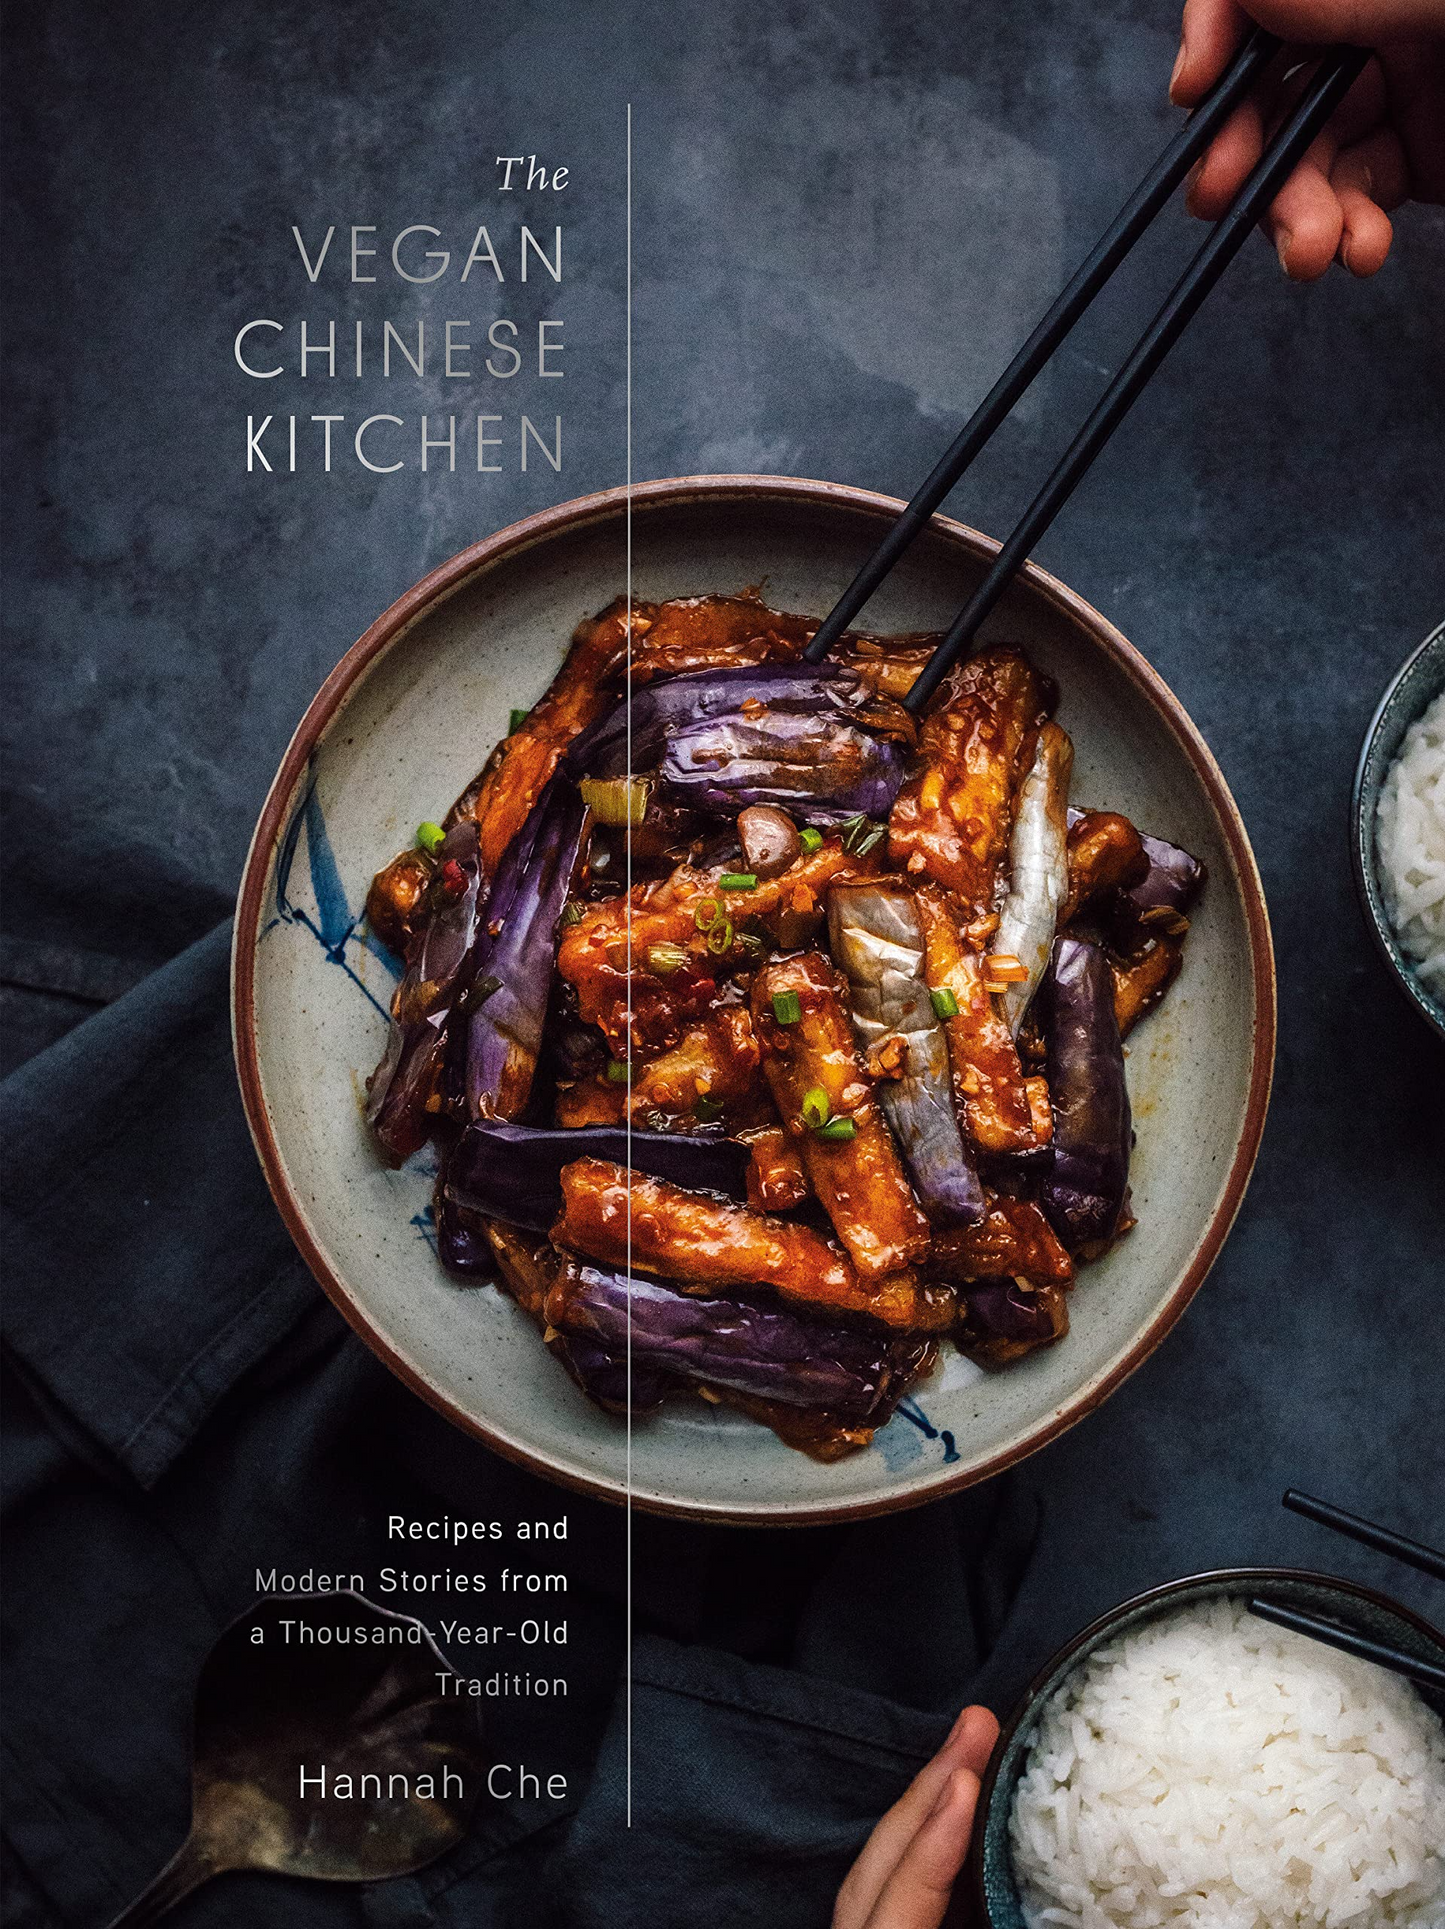 The Vegan Chinese Kitchen - The Crowd Went Wild